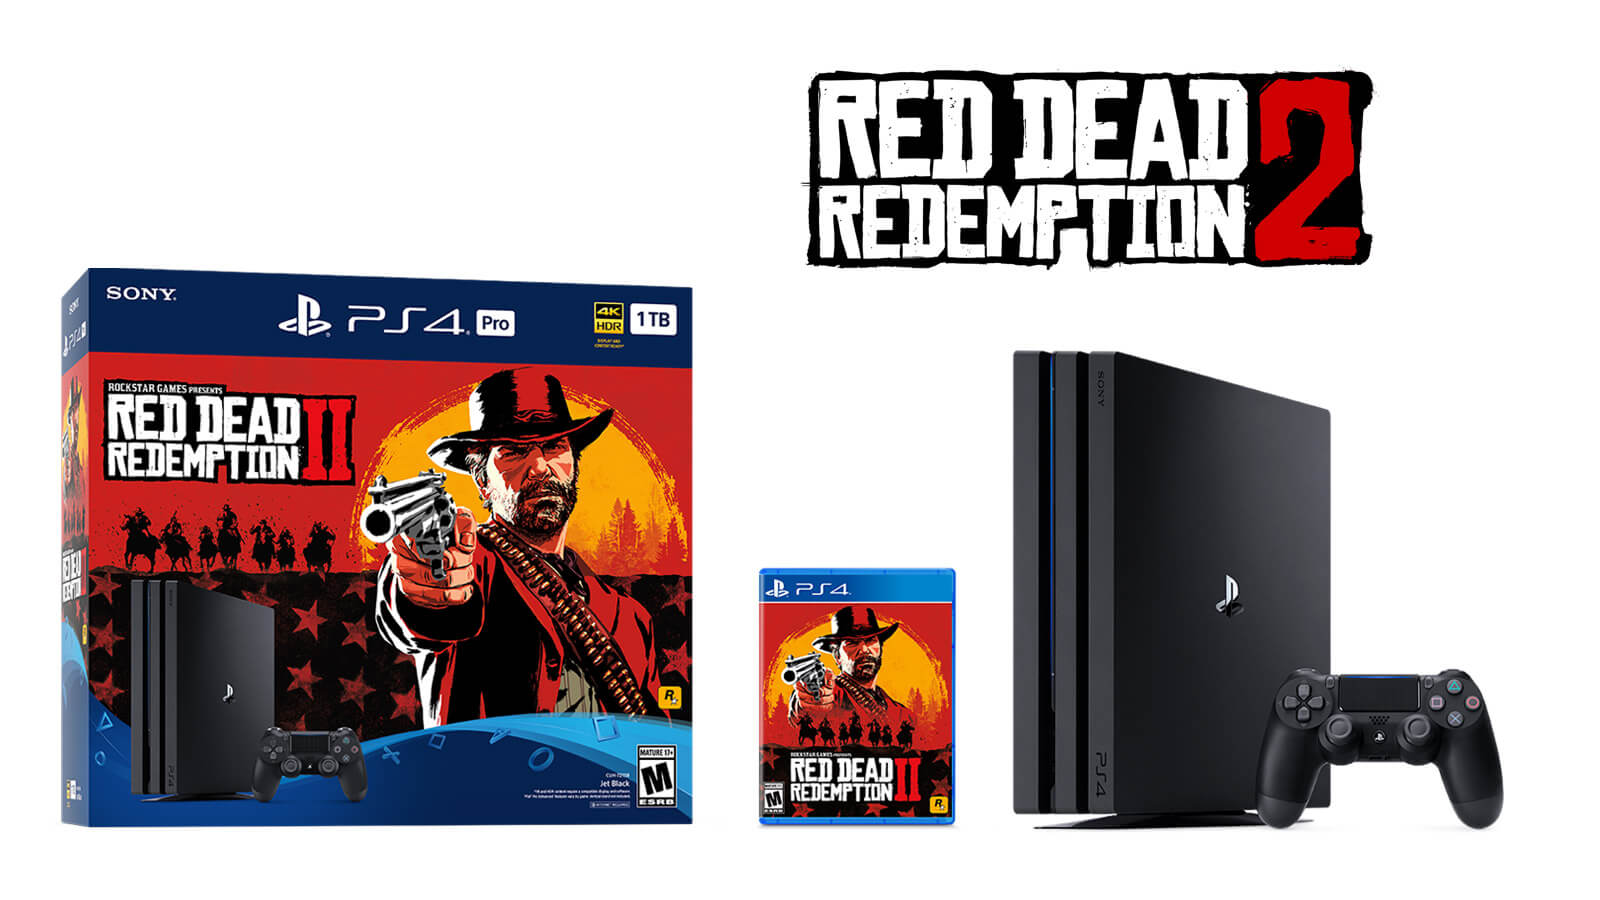 Red redemption 2 купить ps4. Red Dead Redemption ps4. Red Dead Redemption 2 ps4 диск. PLAYSTATION 4 Pro и игра Red Dead Redemption 2 Bundle. PLAYSTATION 2 Эльдорадо бандл.